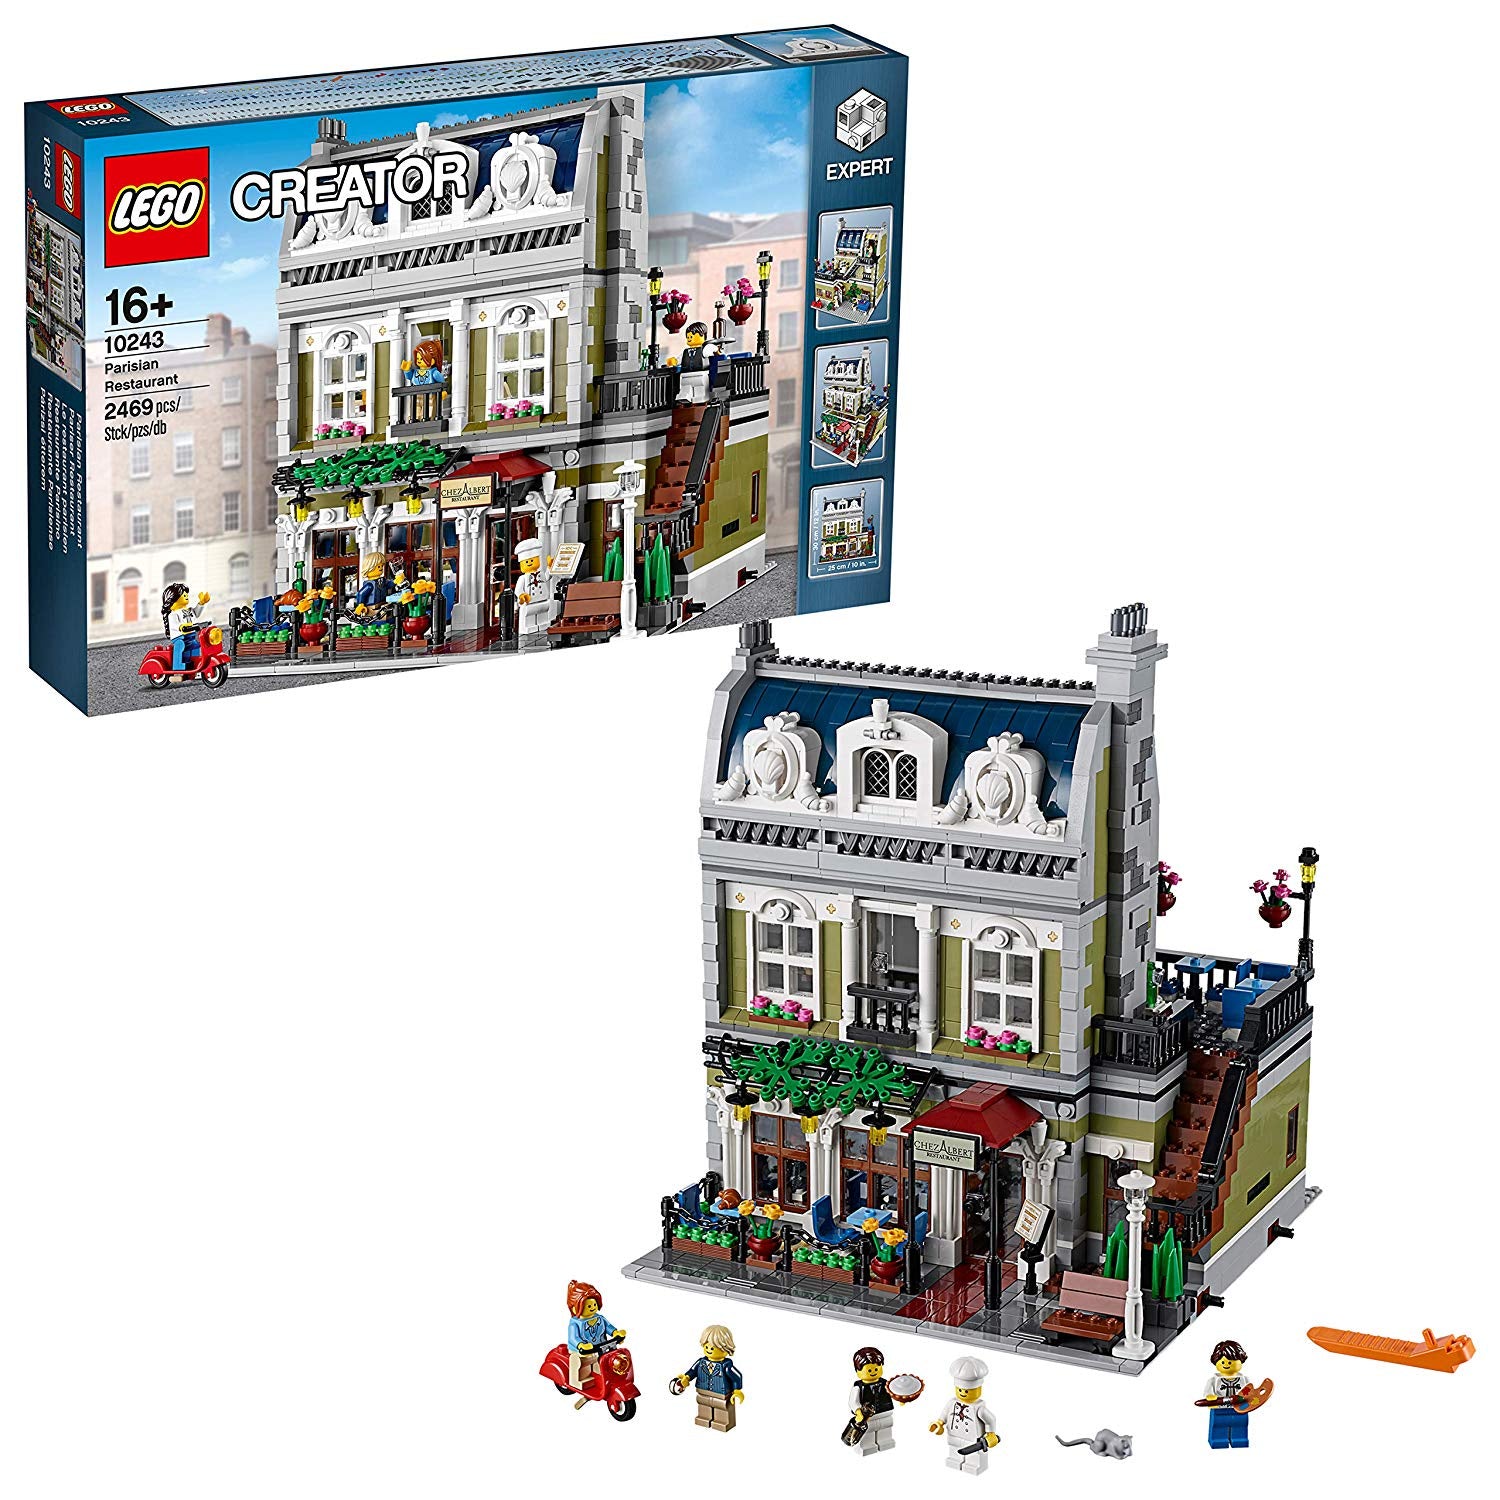 Lego Creator Expert: Parisian Restaurant 10243 (Sealed, rough box with shelfwear and small hole)